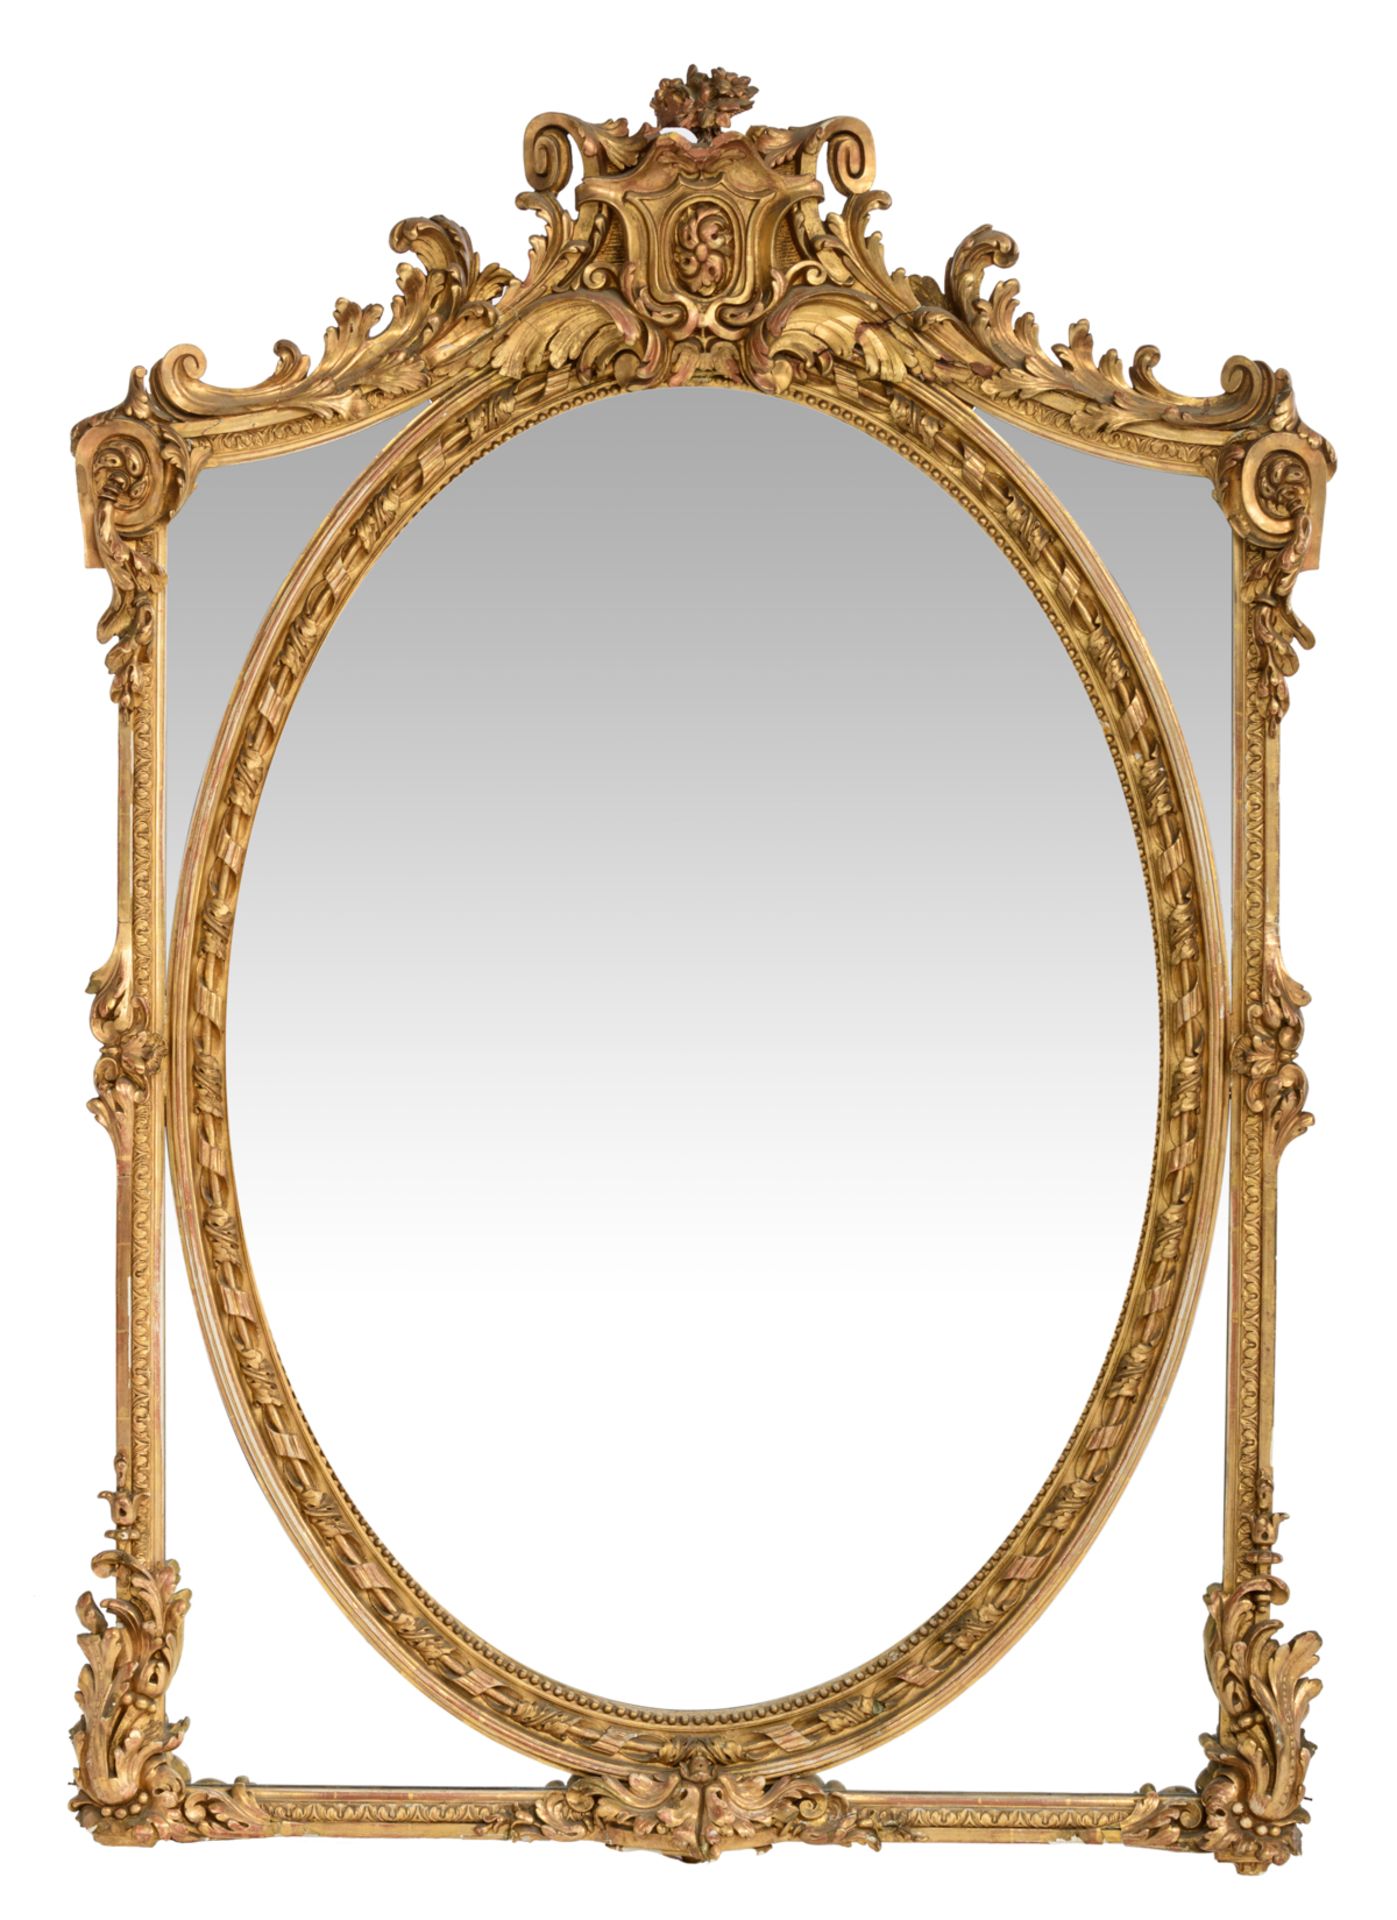 An imposing Baroque style gilt wooden wall mirror, 113 x 162 cm